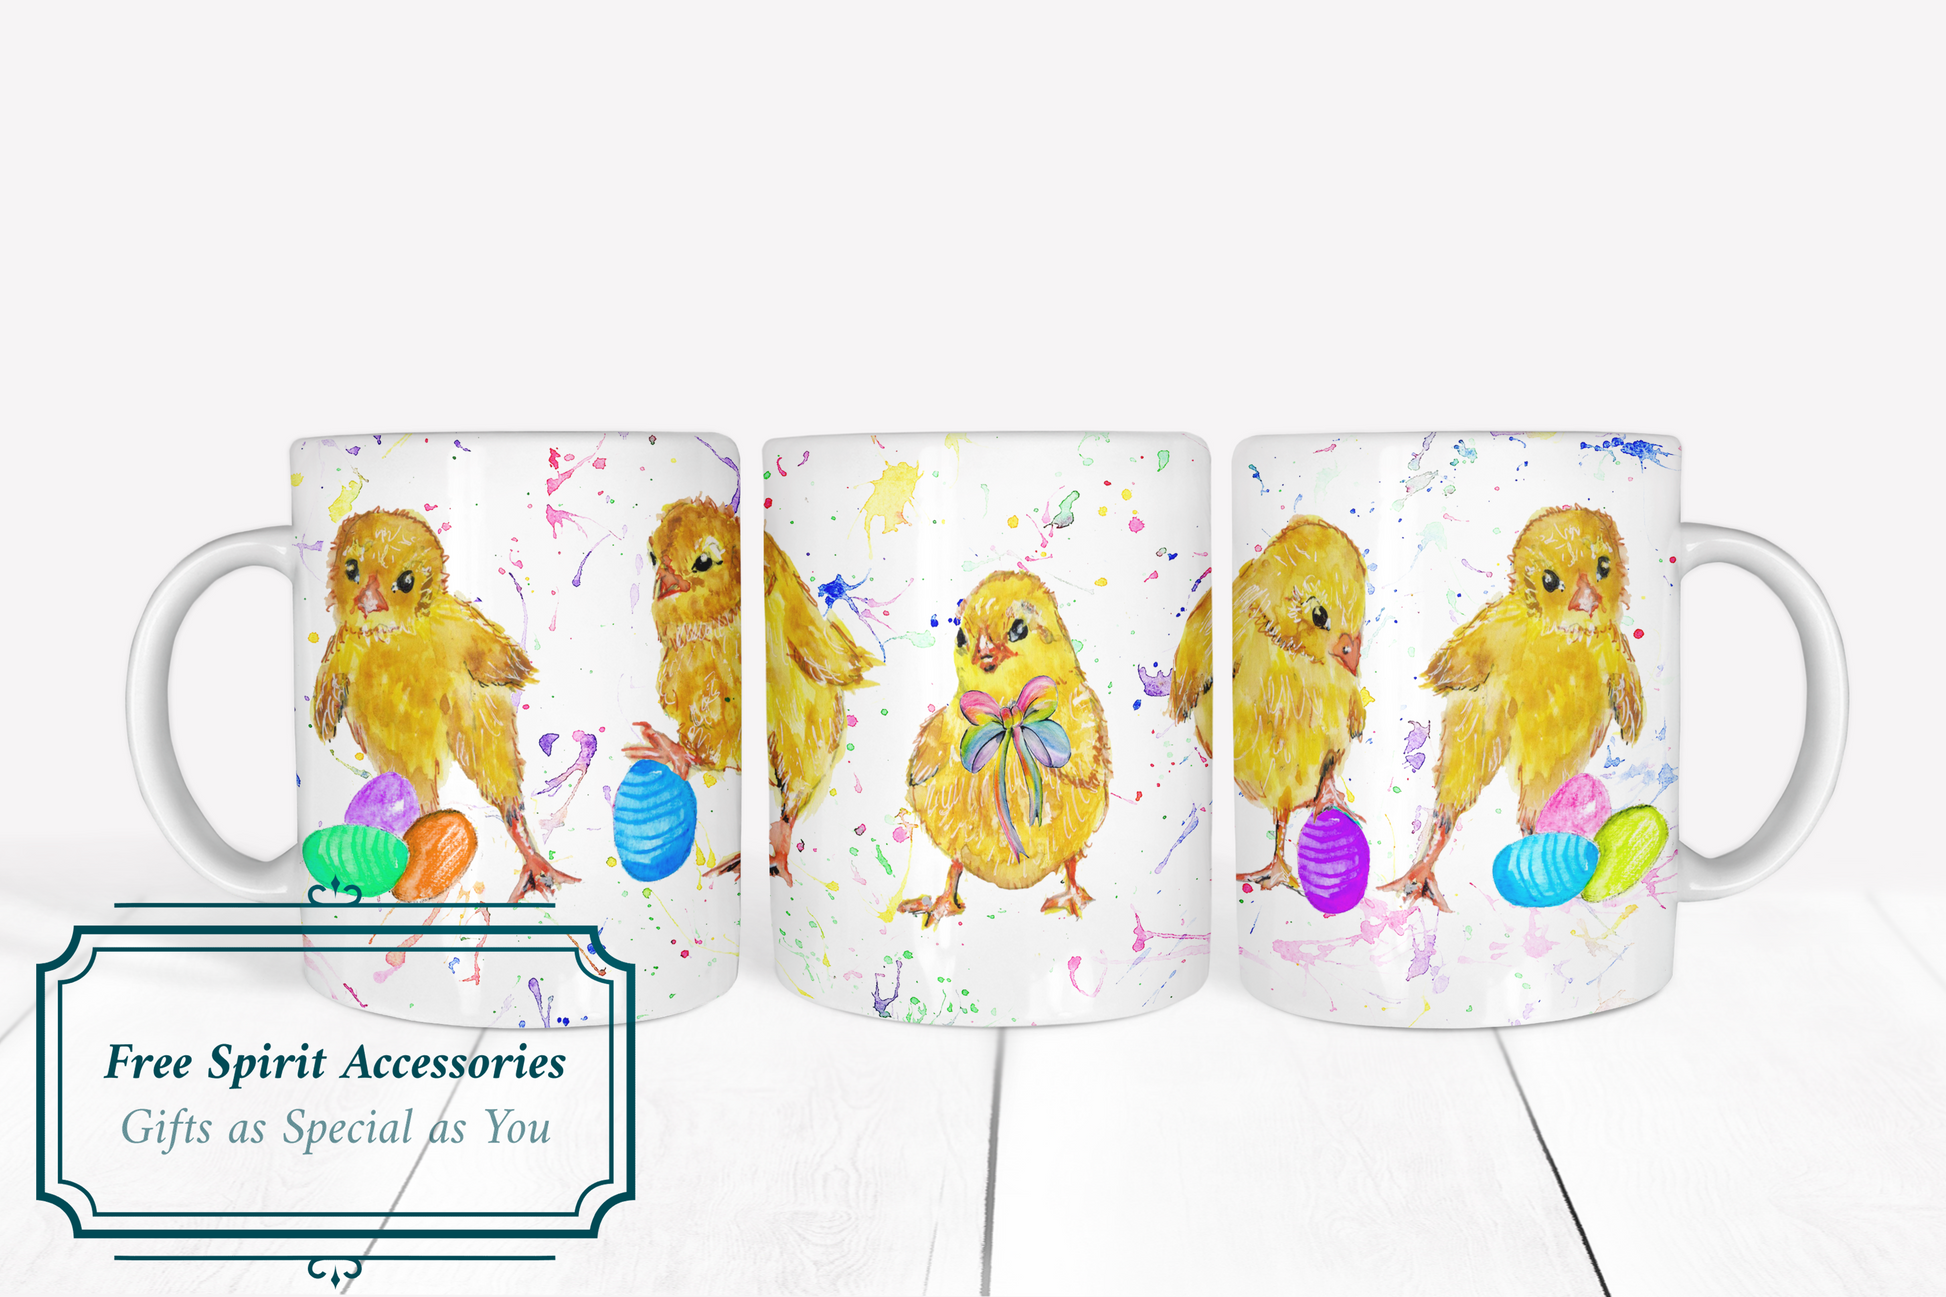  Beautiful Easter Chicks Coffee Mug by Free Spirit Accessories sold by Free Spirit Accessories